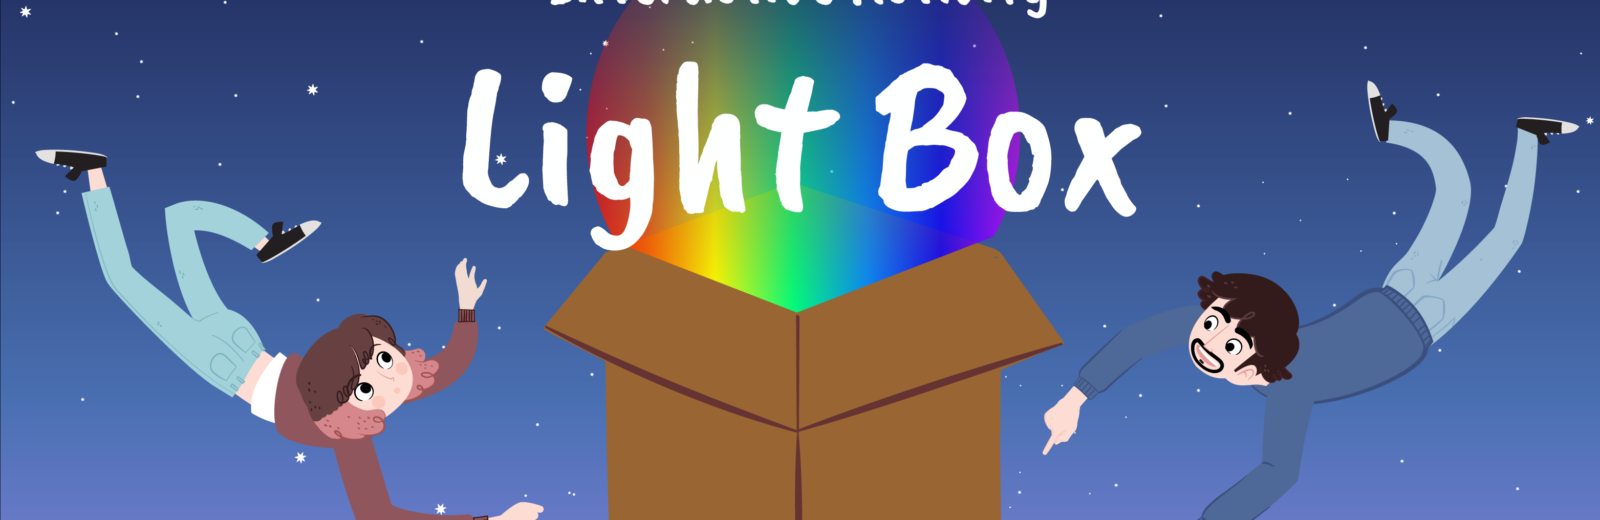 Make Your Own Light Box